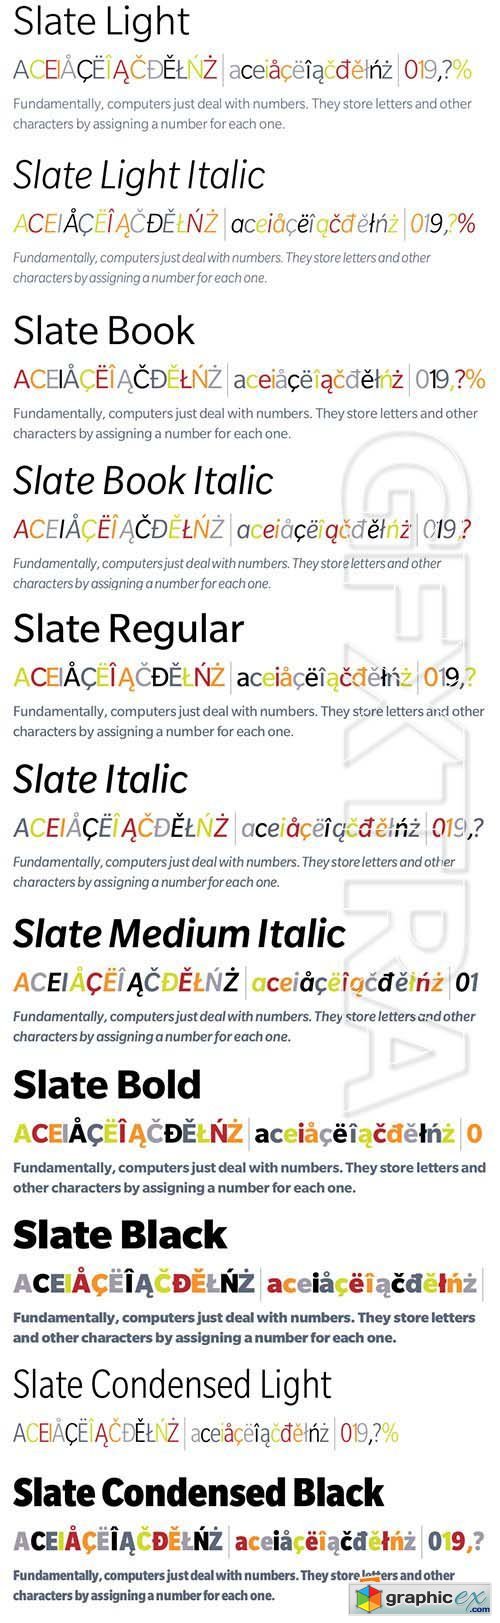 Slate Pro Font Family - 18 Fonts 1170$